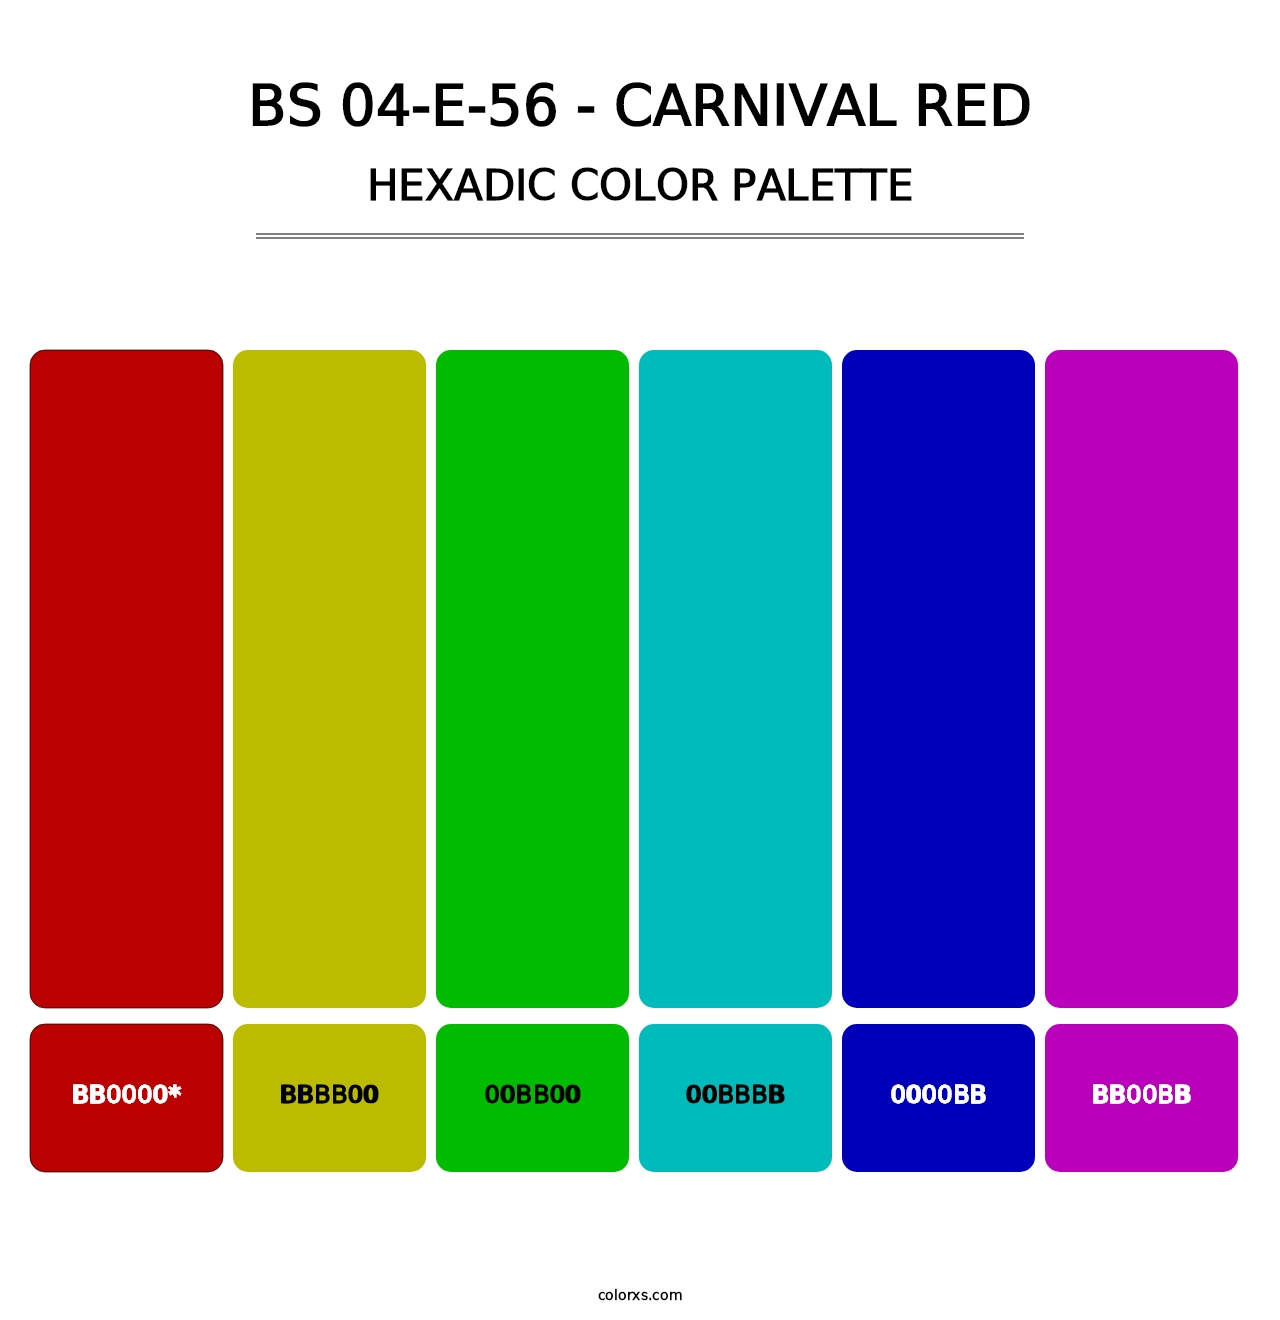 BS 04-E-56 - Carnival Red - Hexadic Color Palette